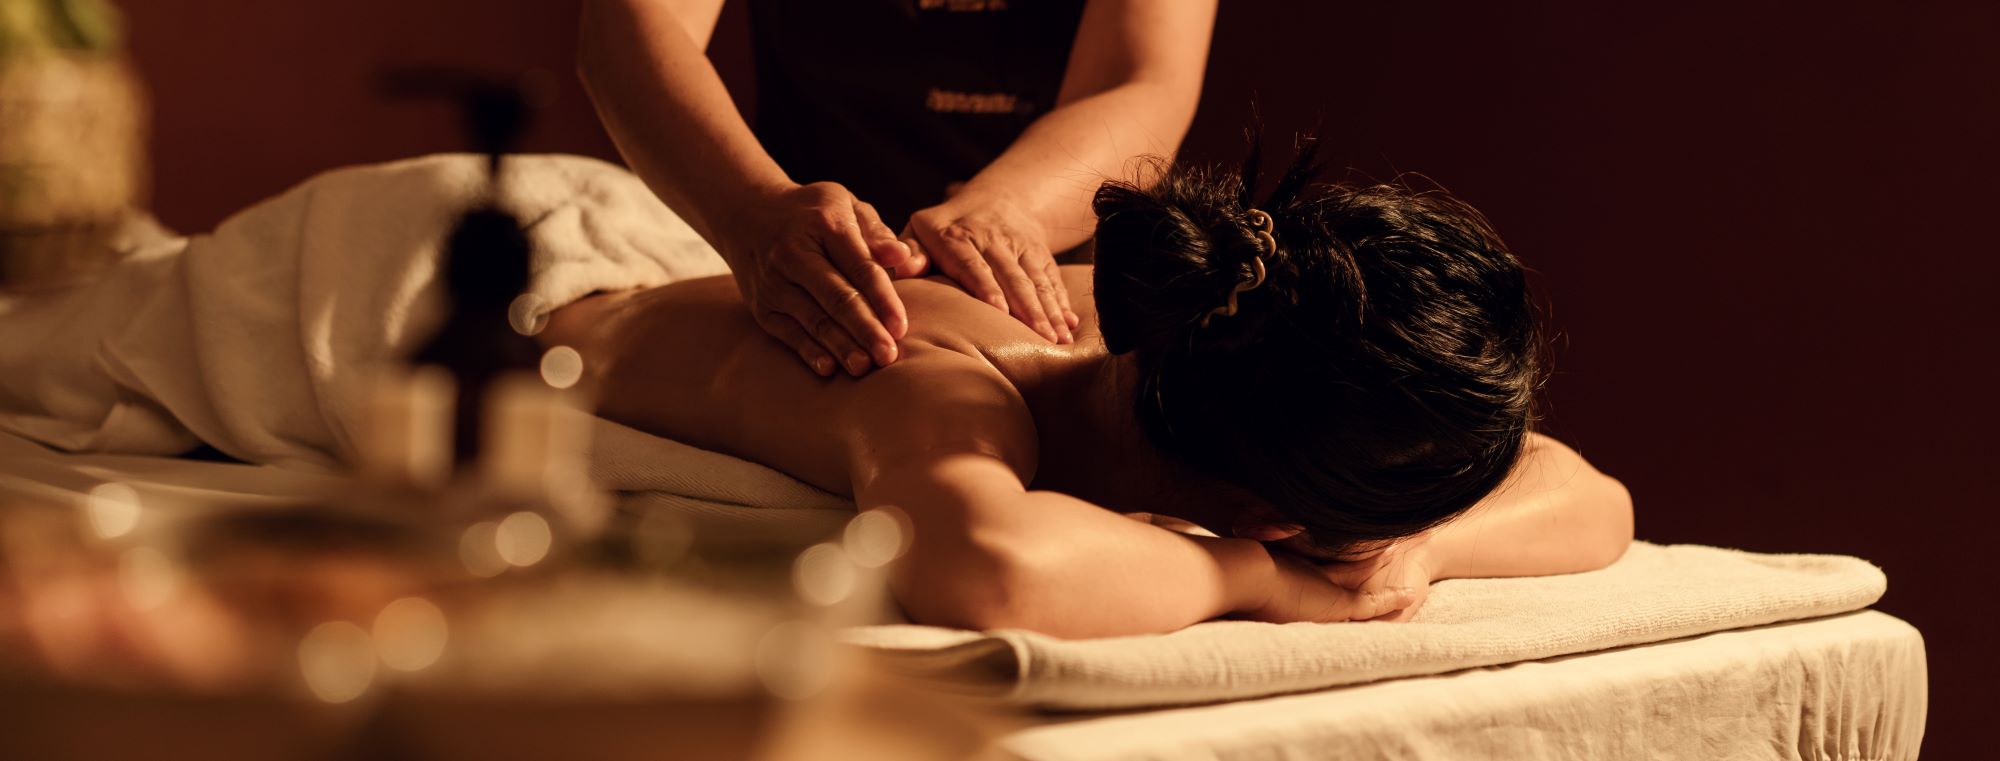 Massage Therapy Vancouver Washington